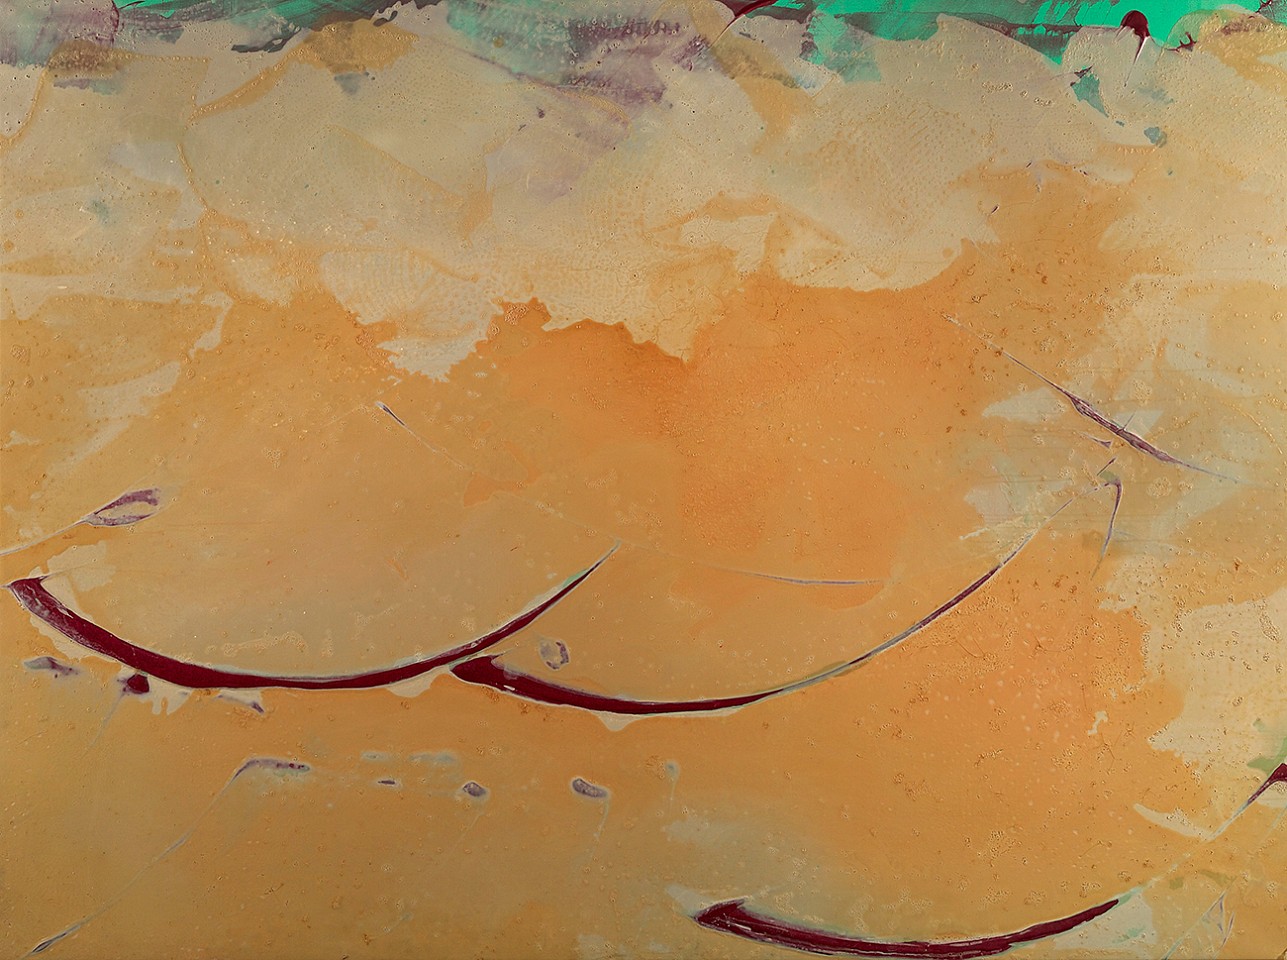 Walter Darby Bannard, Down Down, 1979
Acrylic on canvas, 54 x 73 in. (137.2 x 185.4 cm)
BAN-00014